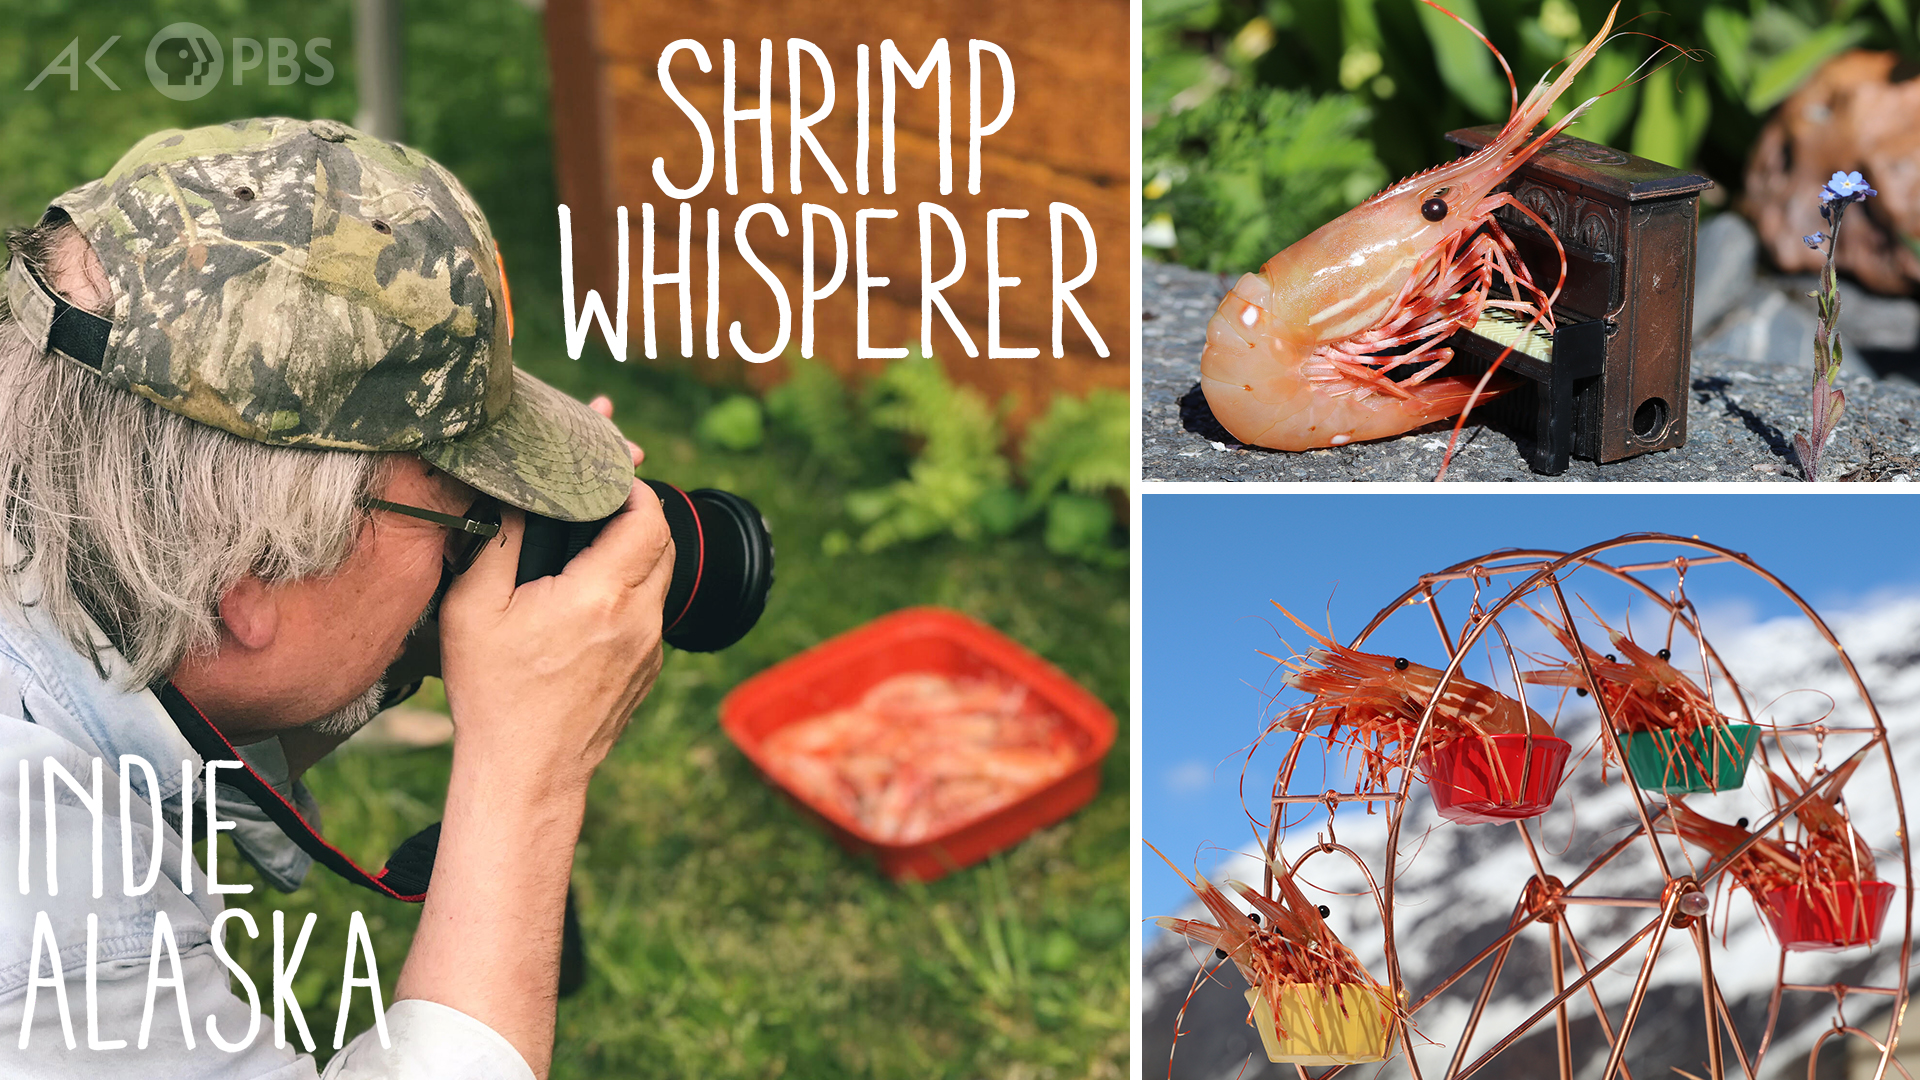 Where Are They Now The Shrimp Whisperer Indie Alaska Alaska